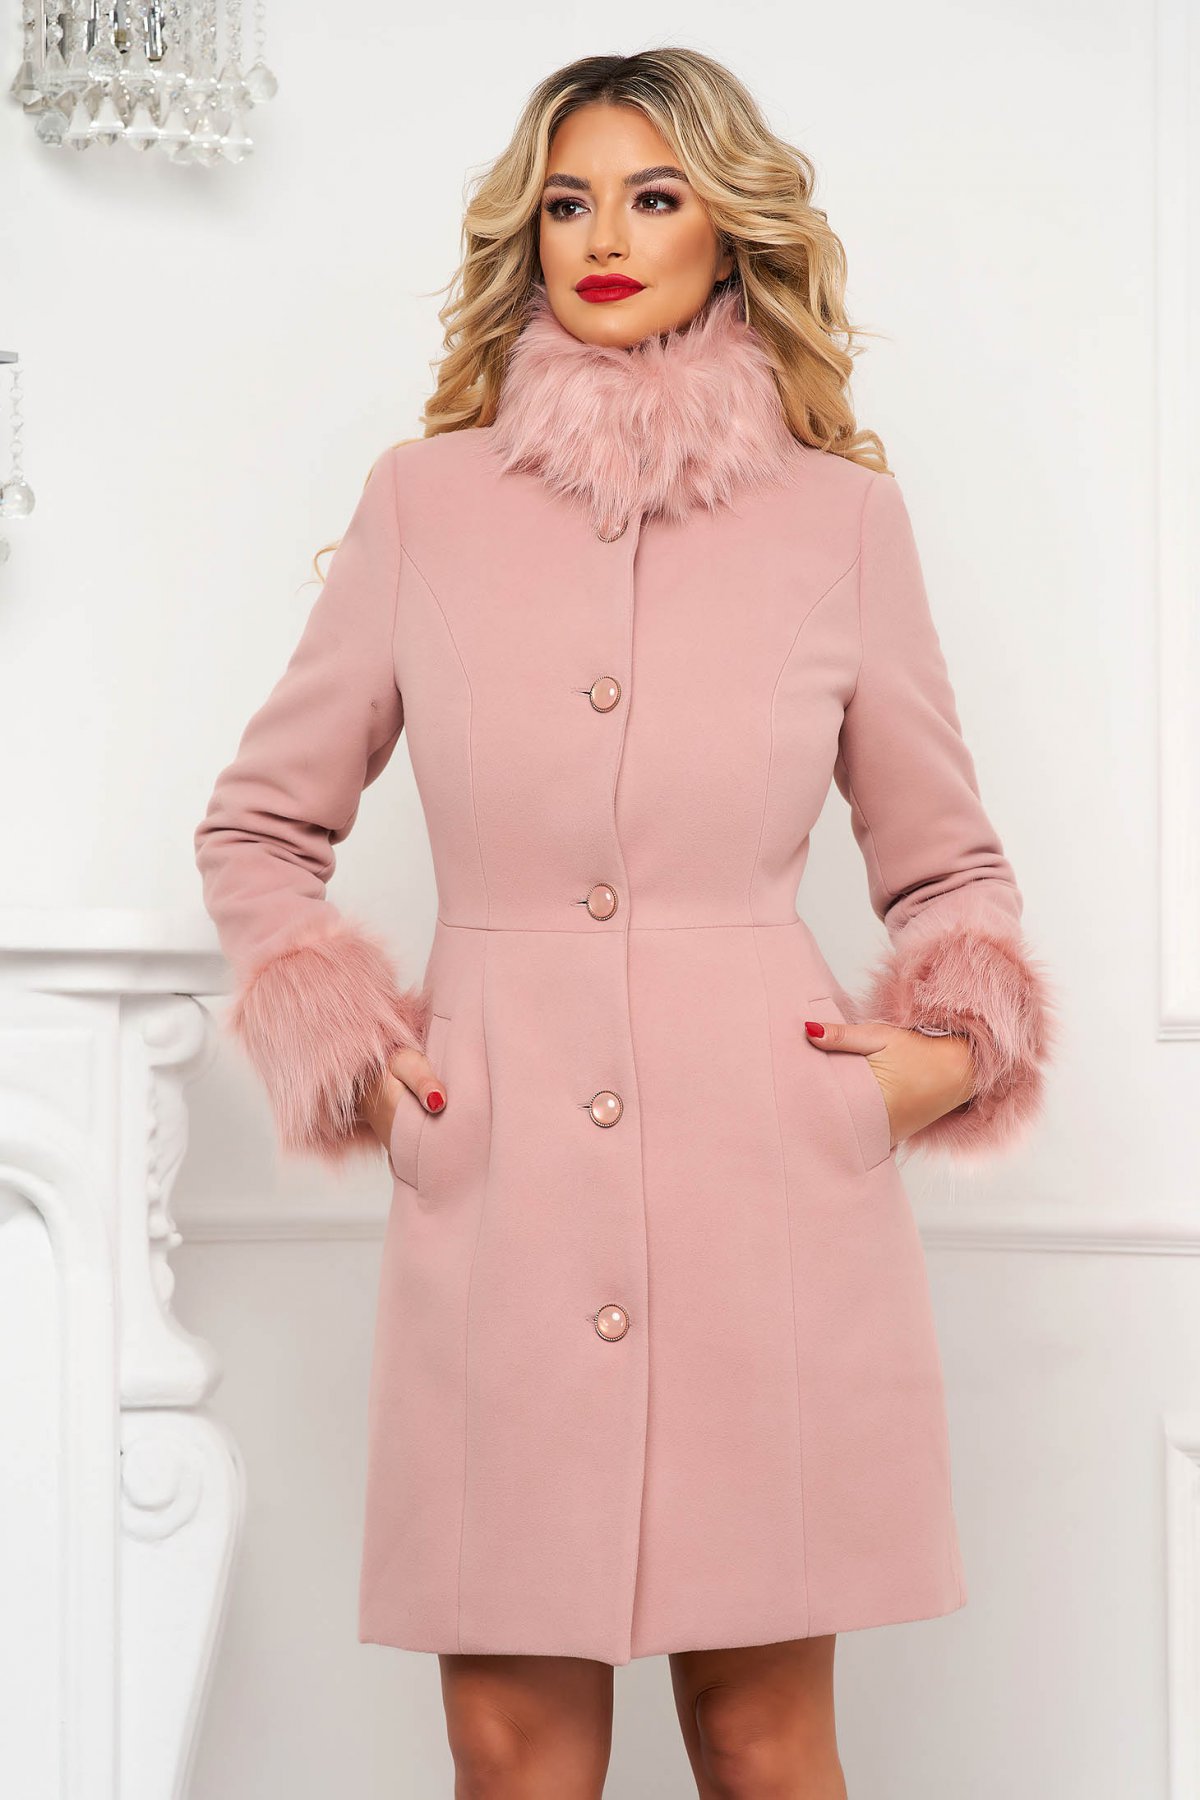 Palton Artista roz prafuit cambrat elegant cu guler si mansete cu blana 2022 ❤️ Pret Super starshiners imagine noua 2022